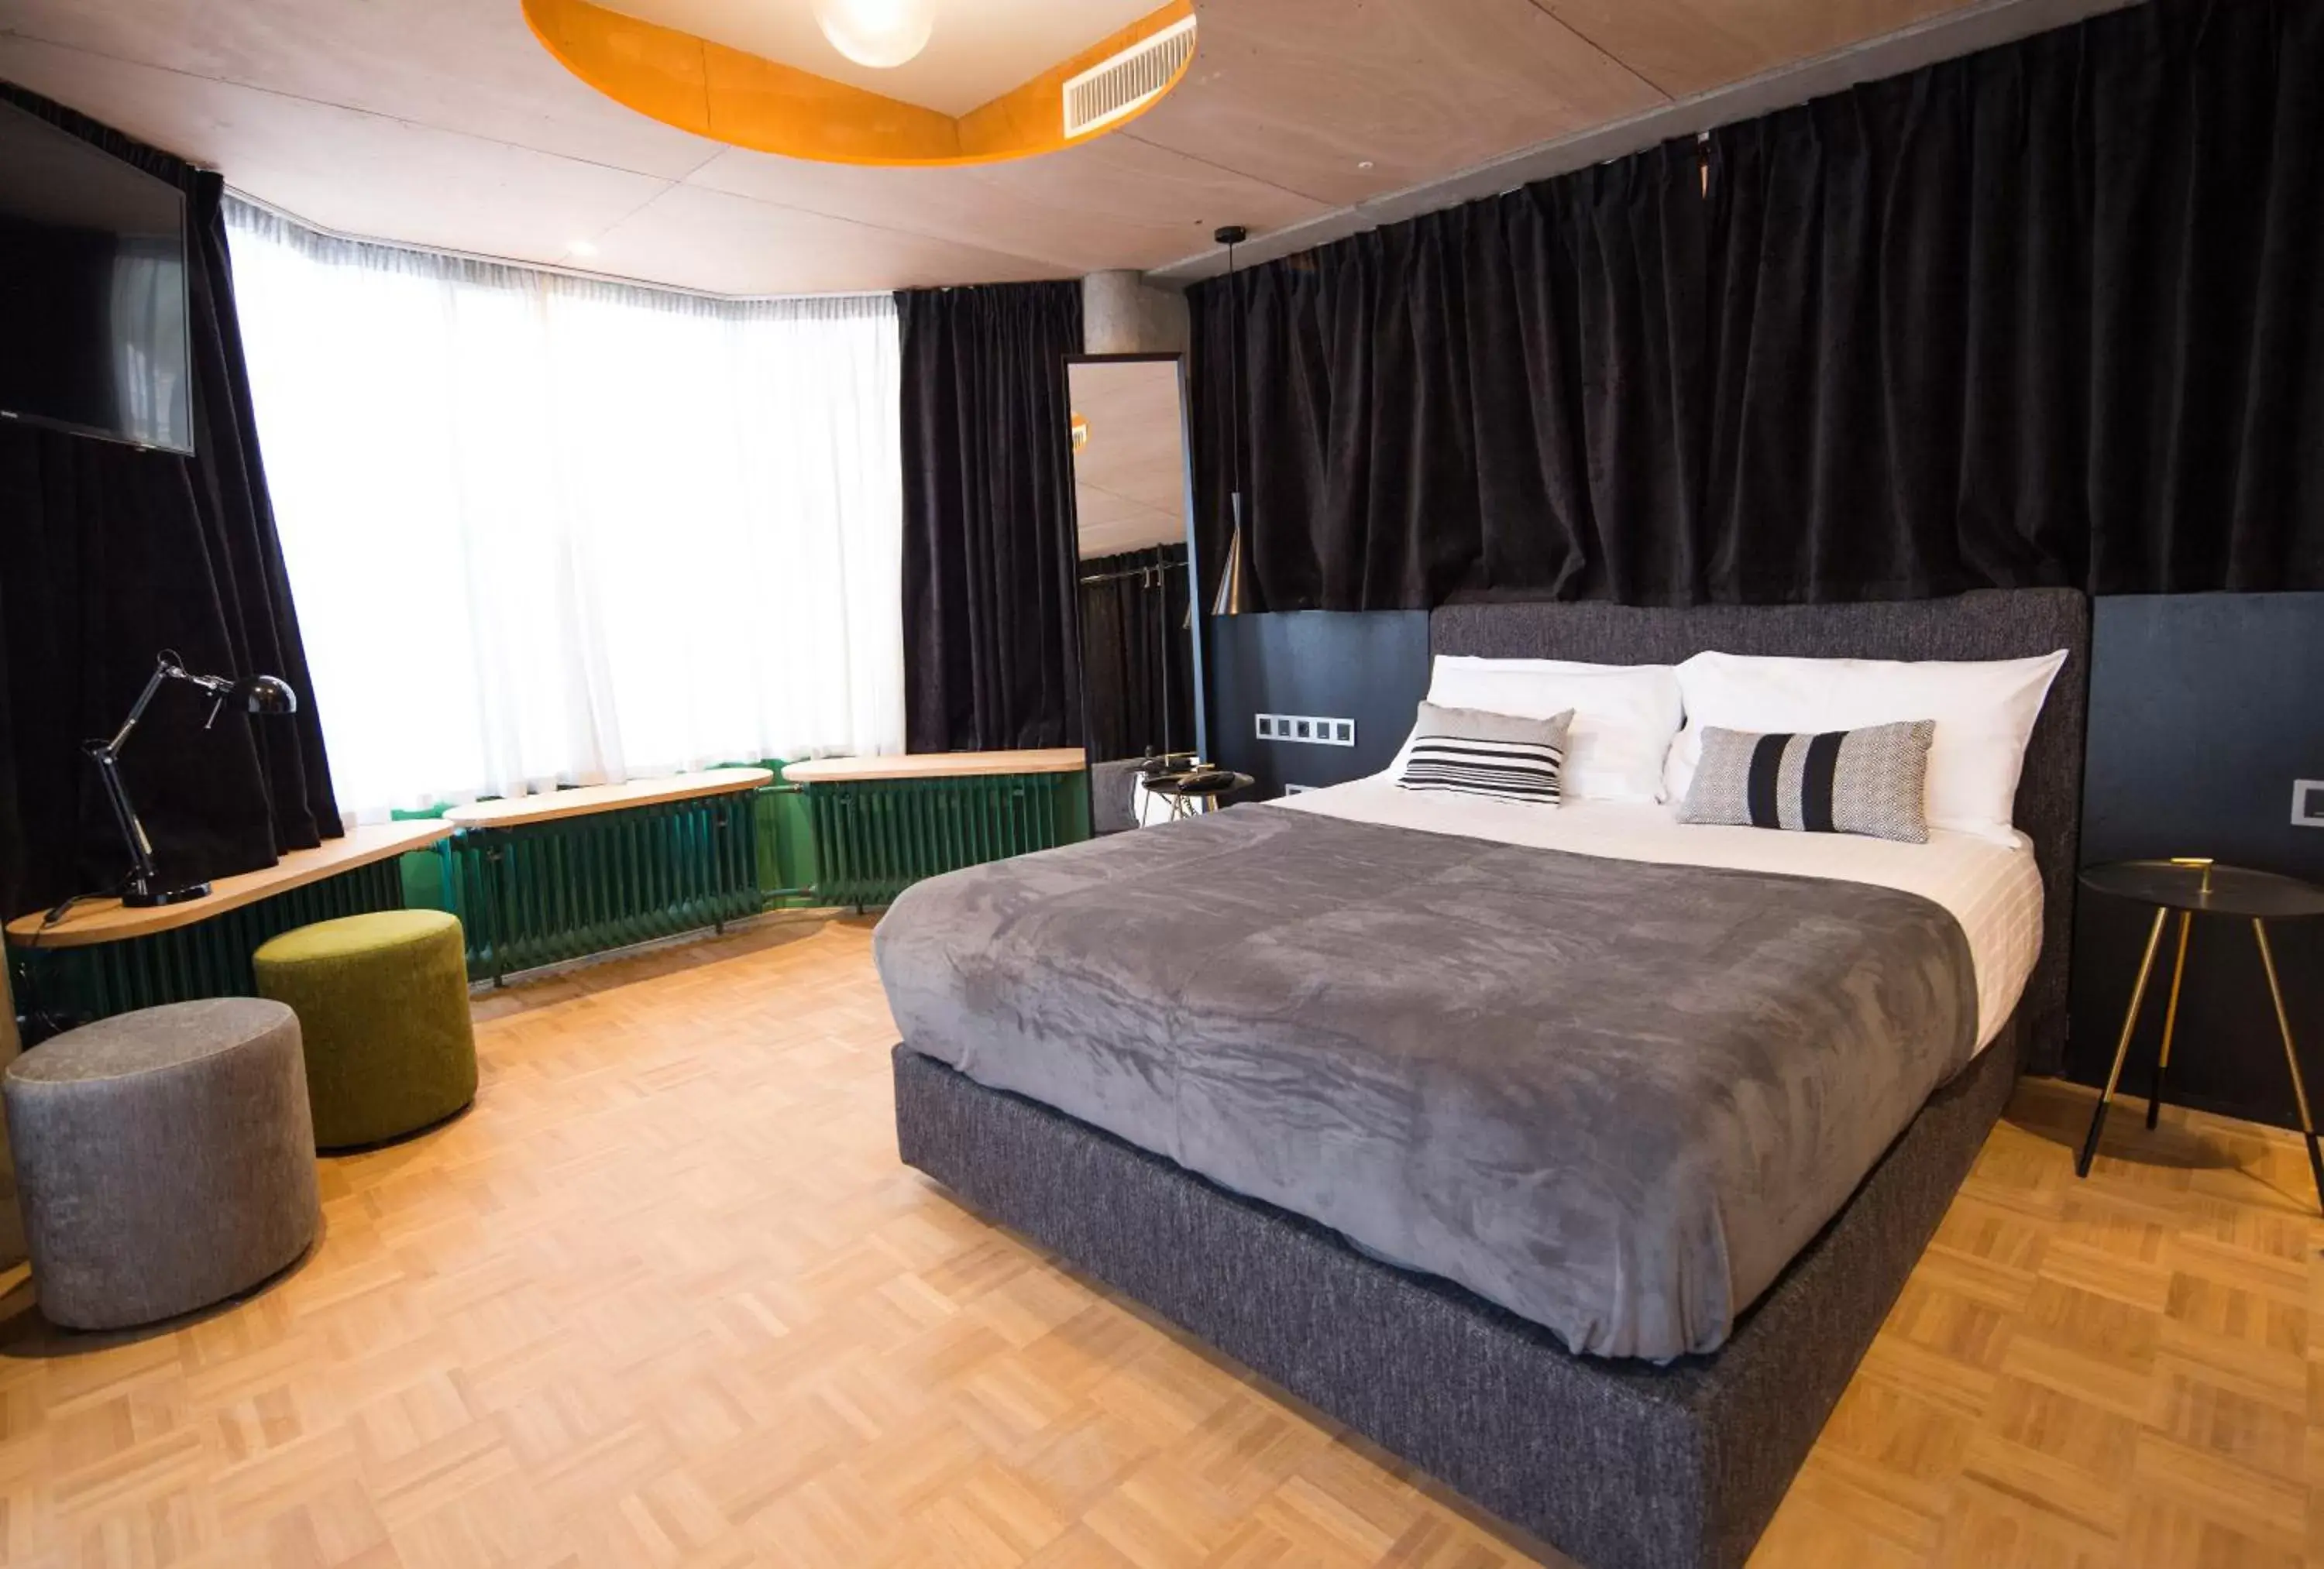 Bedroom, Bed in Quentin Zoo hotel